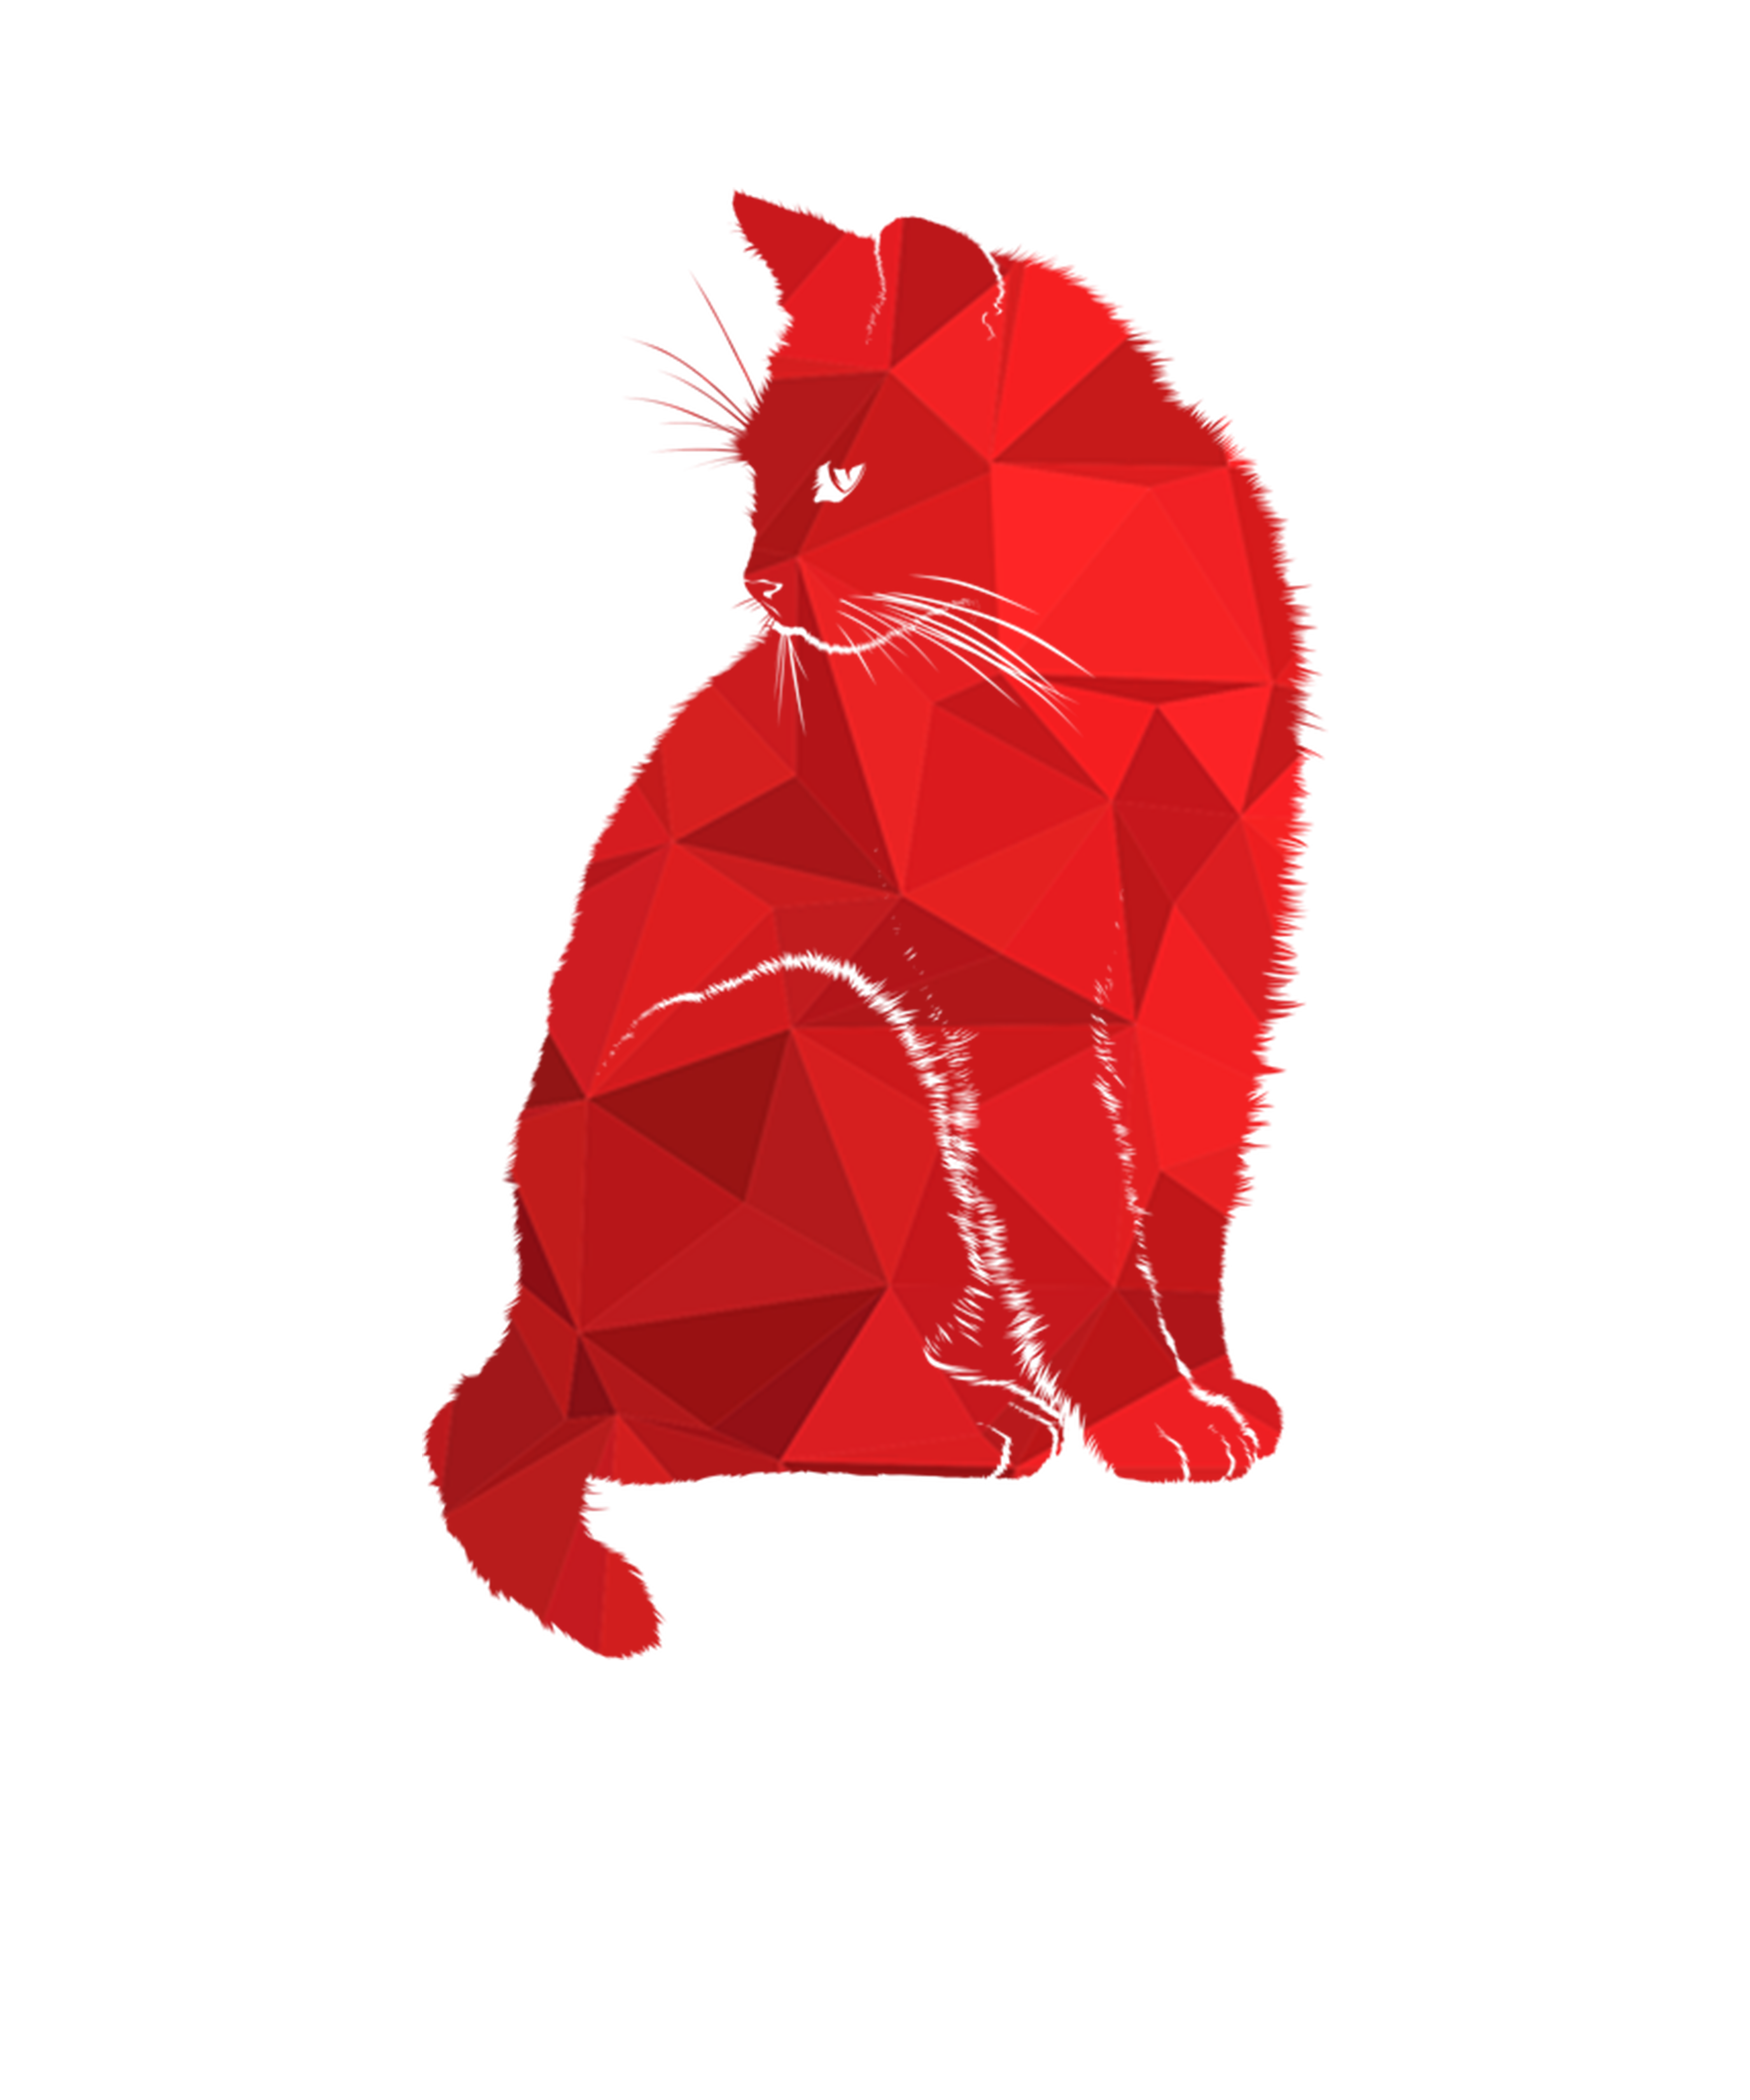 4 red cat. Ред Кэт ред Кэт. Красный кот. Красный котенок. Красный кот на белом фоне.